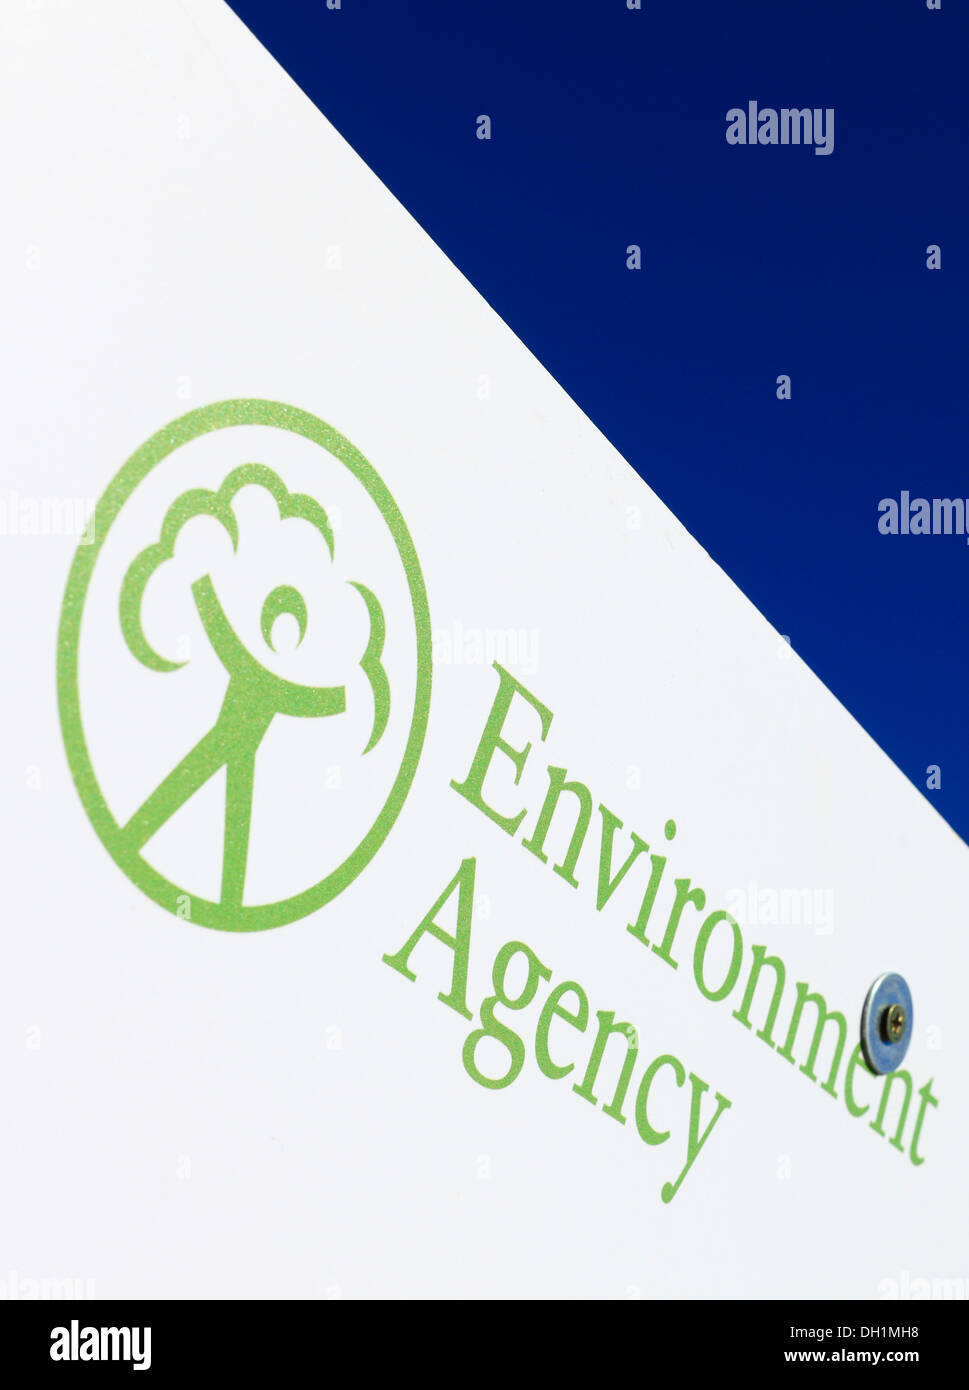 Agenzia per l'ambiente logo su una scheda con cielo blu dietro. Foto Stock